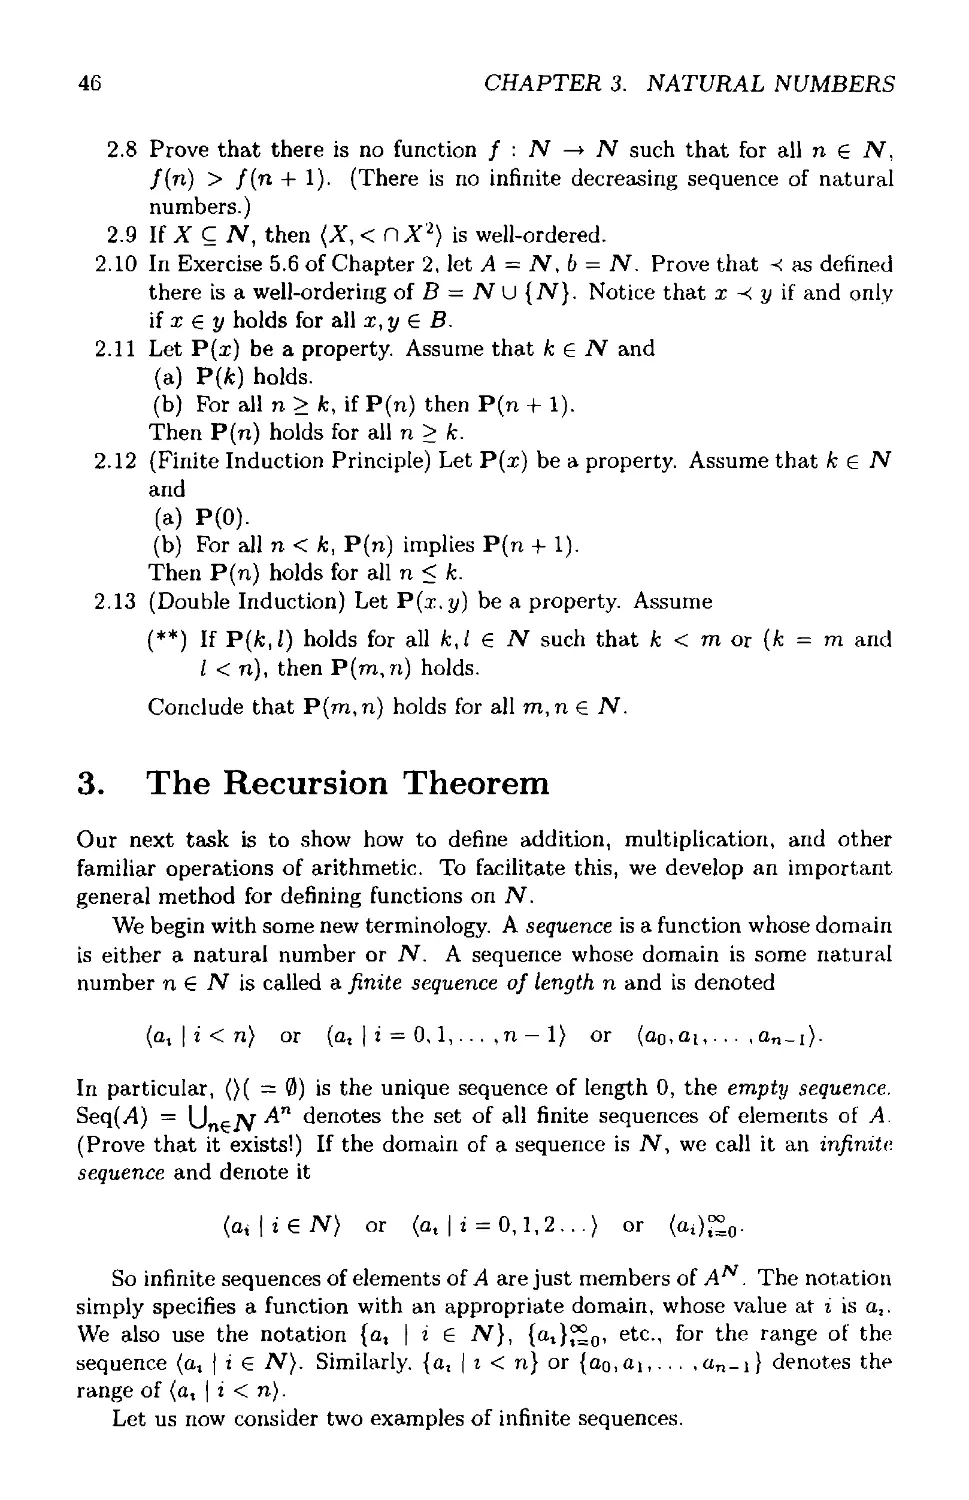 3 The Recursion Theorem